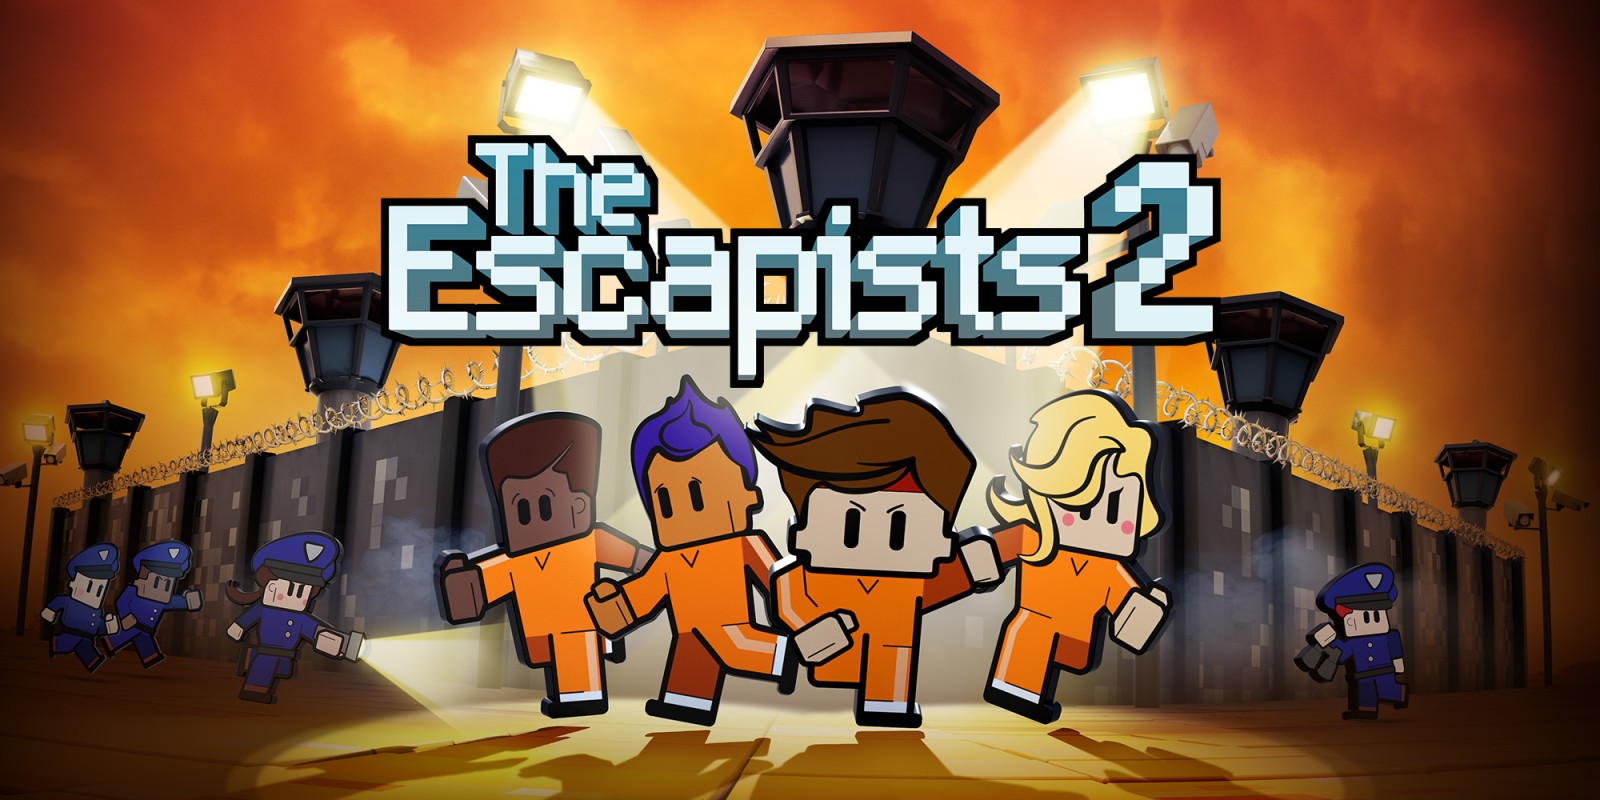 the escapist 2